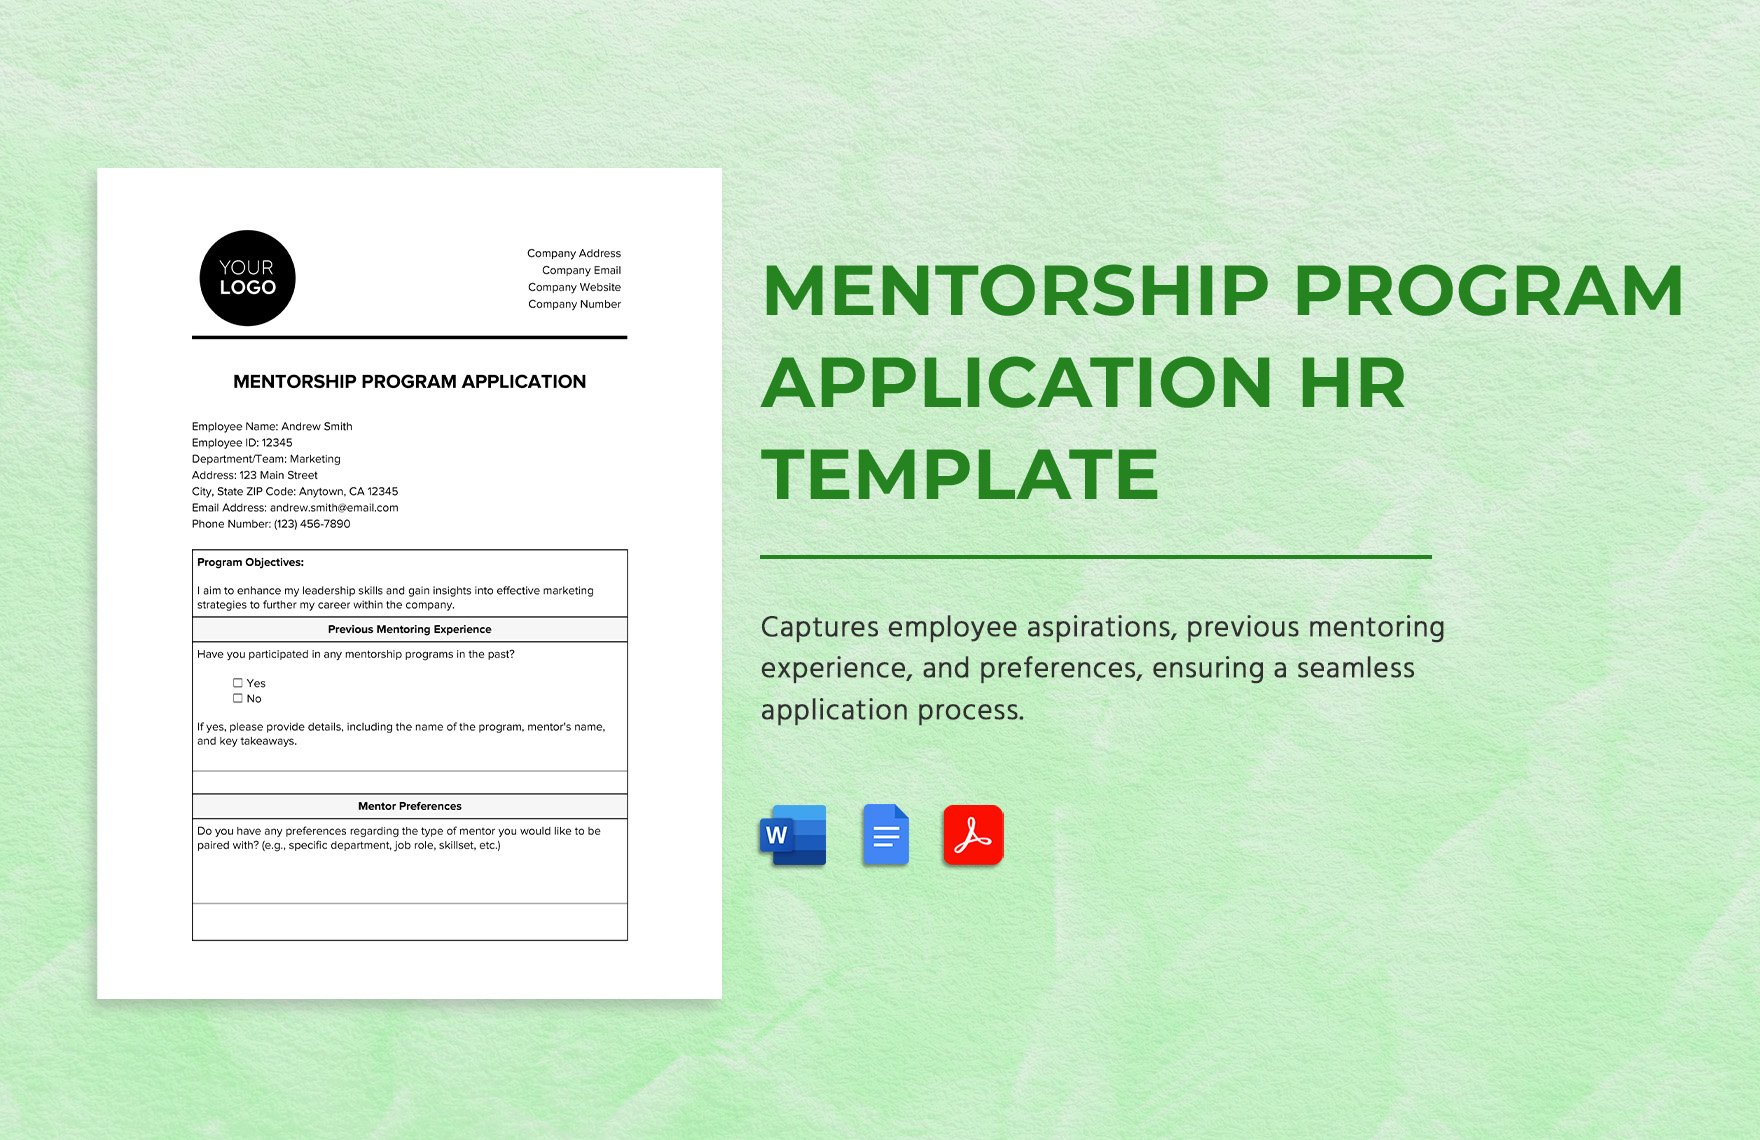 Mentorship Program Application HR Template